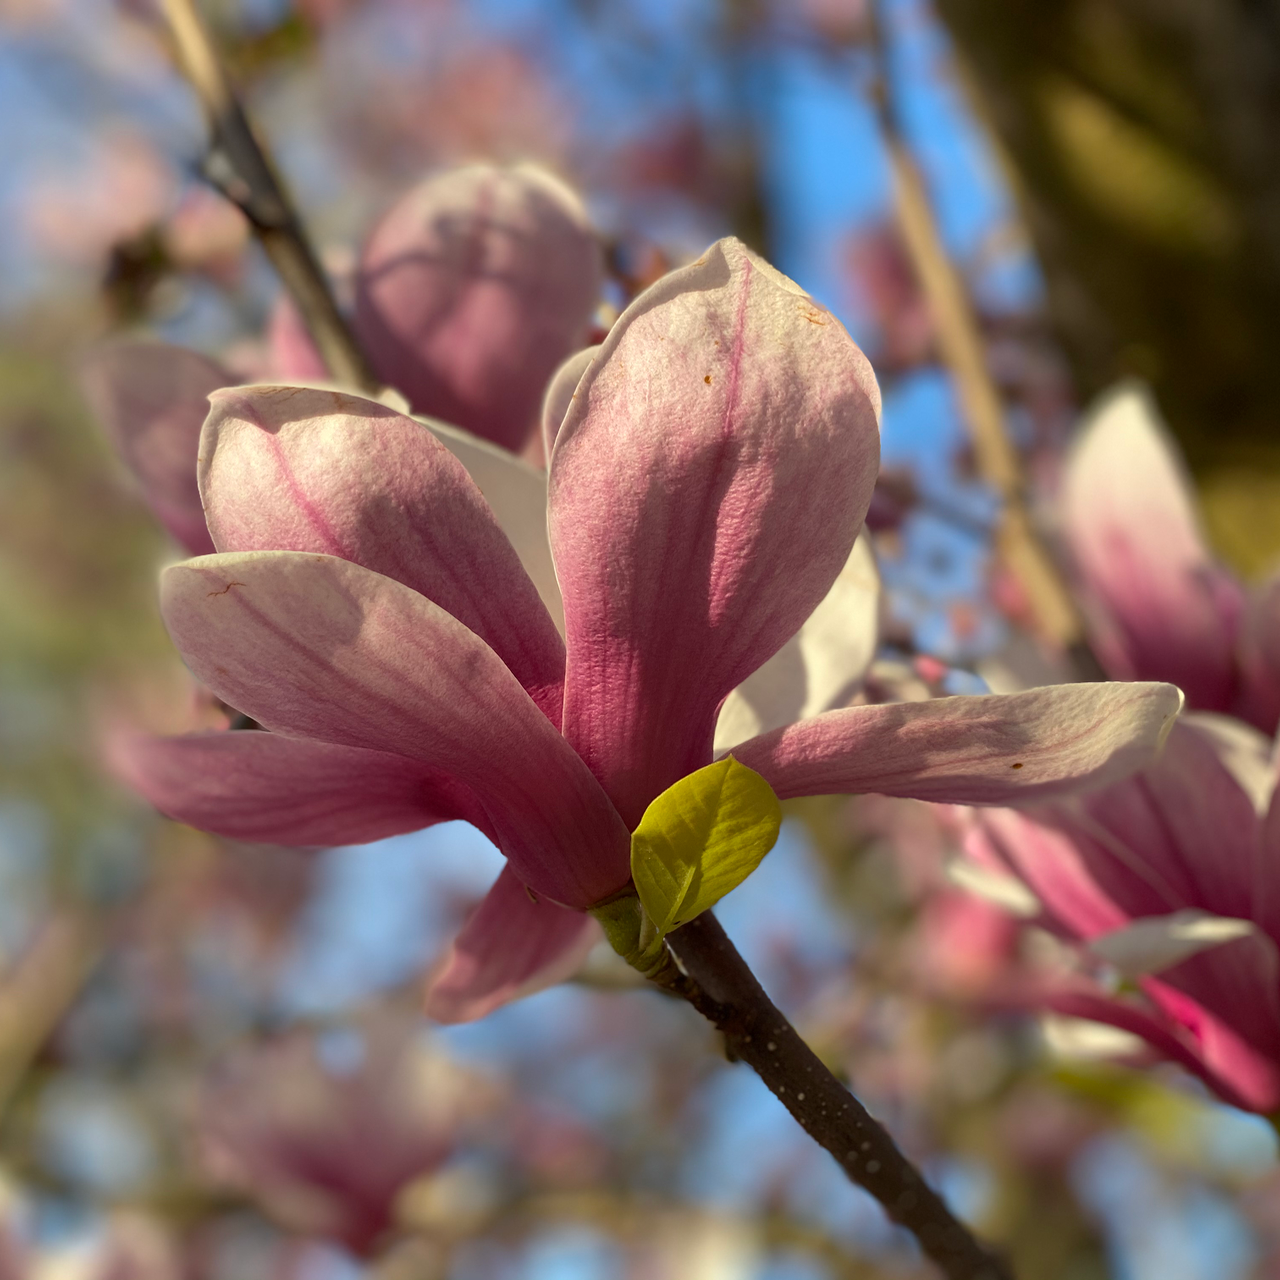 Flower: Saucer Magnolia – Magnolia x soulangeana in Great Falls, VA